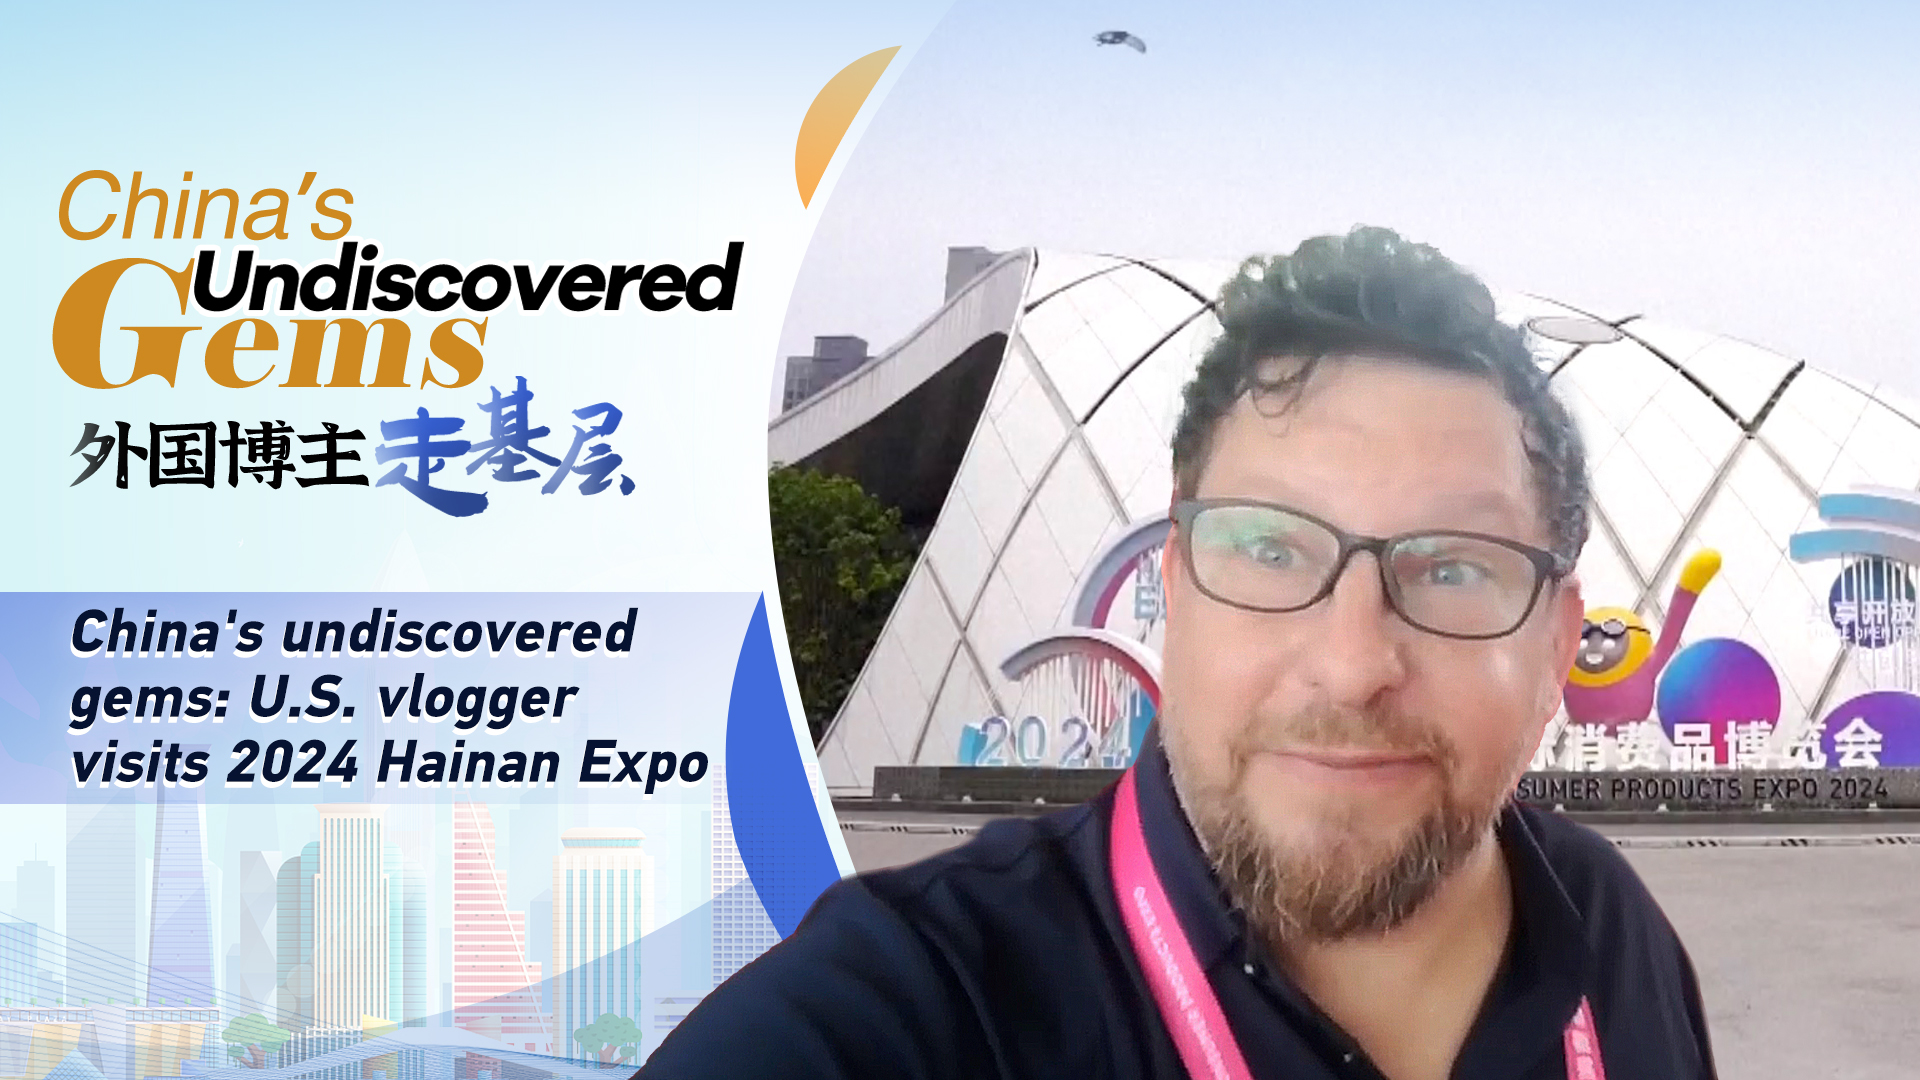 China's undiscovered gems: U.S. vlogger visits 2024 Hainan Expo